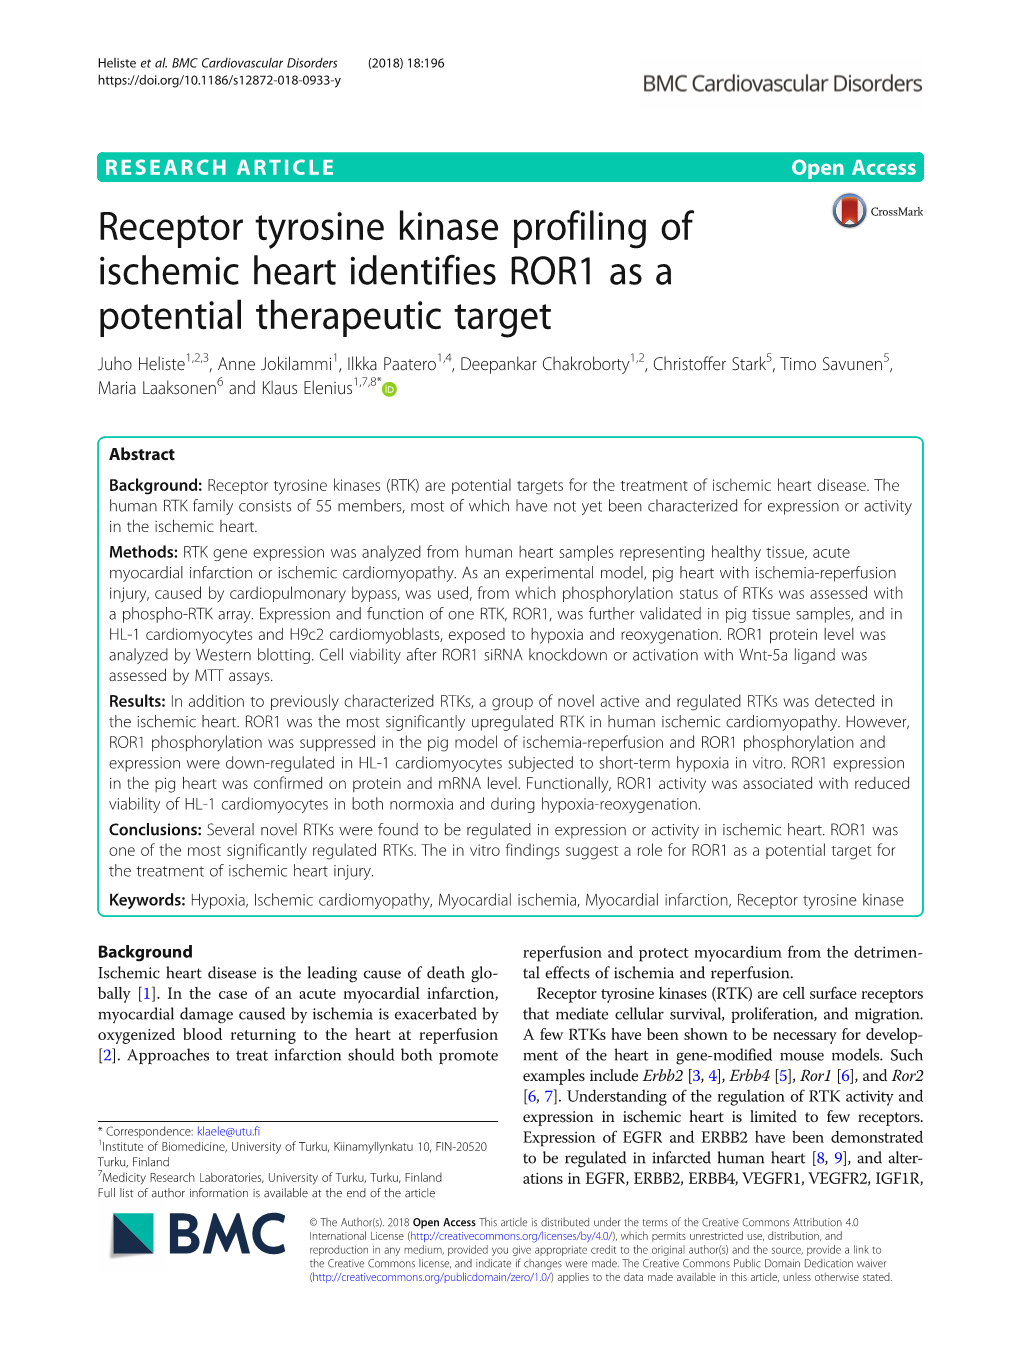 Receptor Tyrosine Kinase Profiling of Ischemic Heart Identifies ROR1 As A